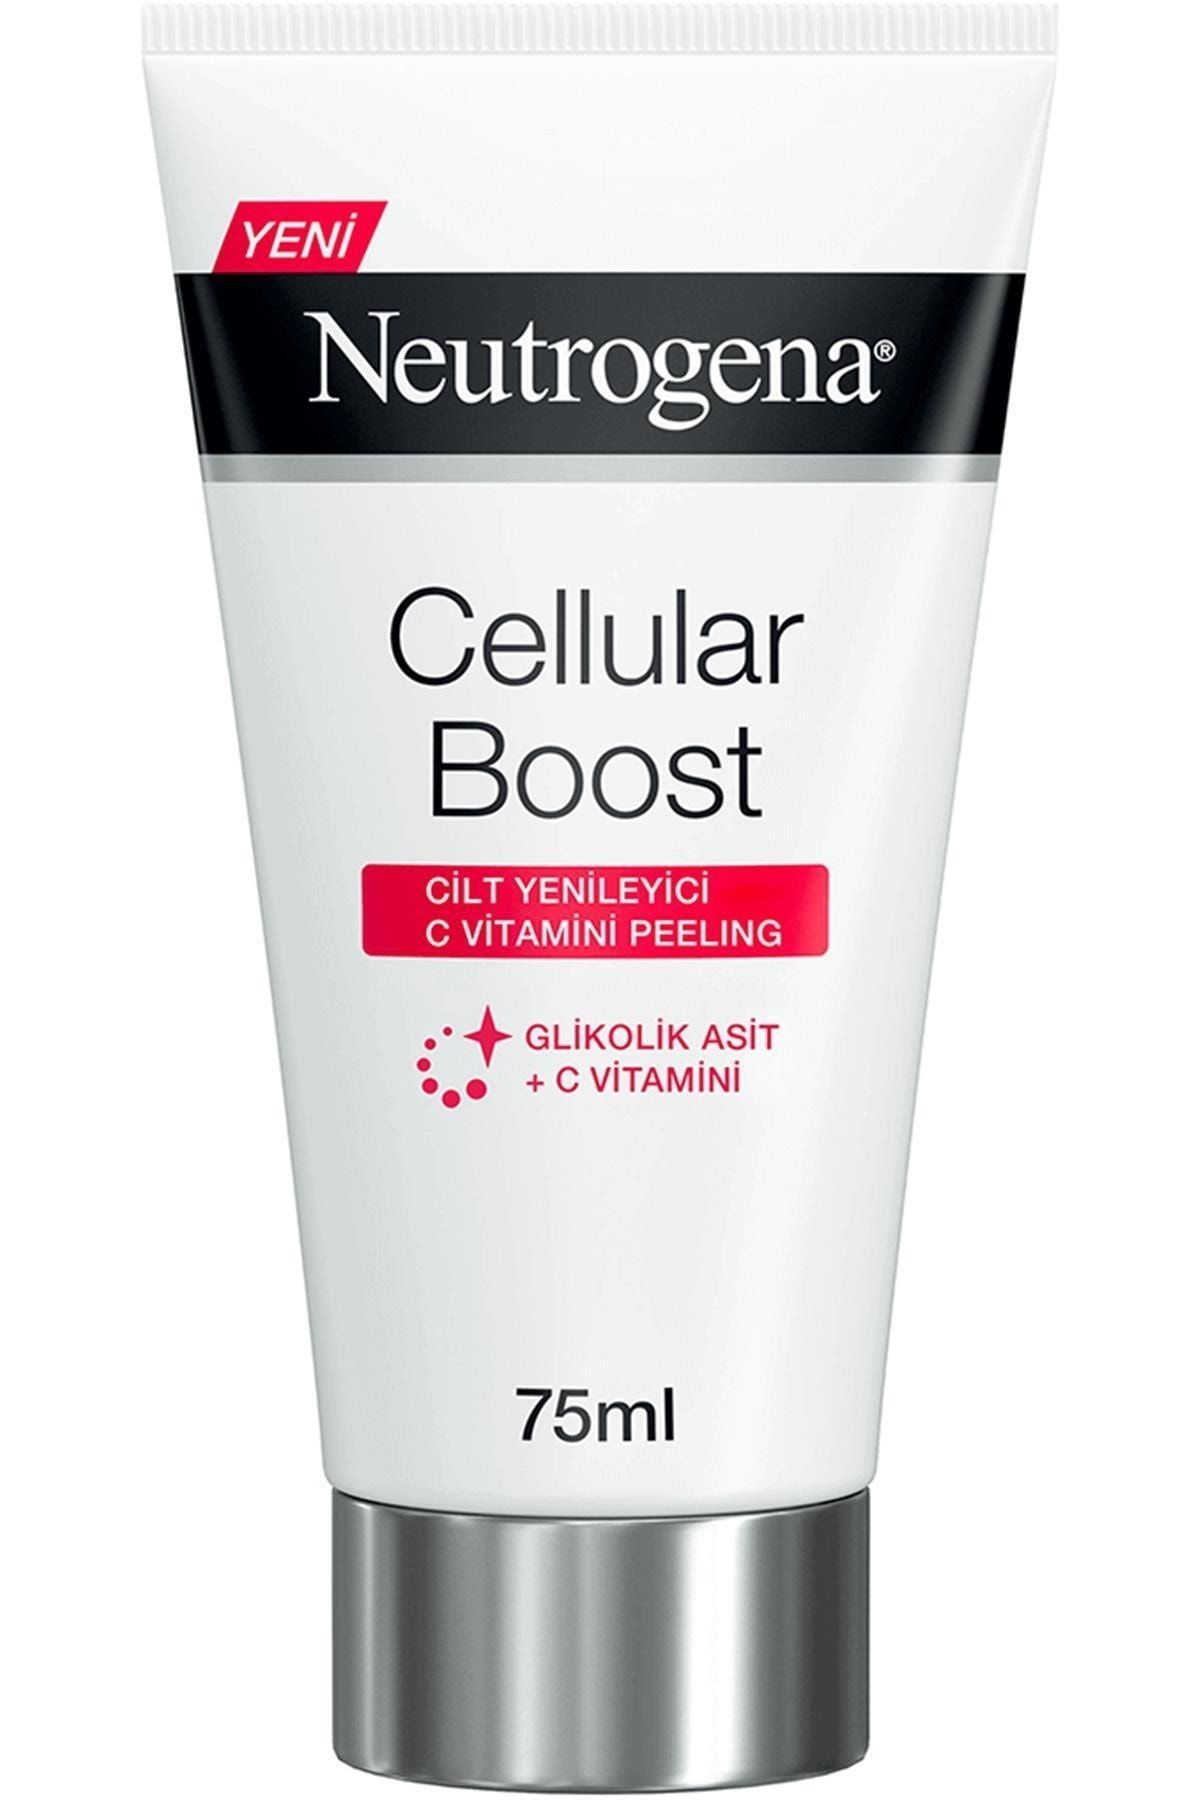 Neutrogena Cellular Boost C Vitamini Içeren Peeling 75 Ml